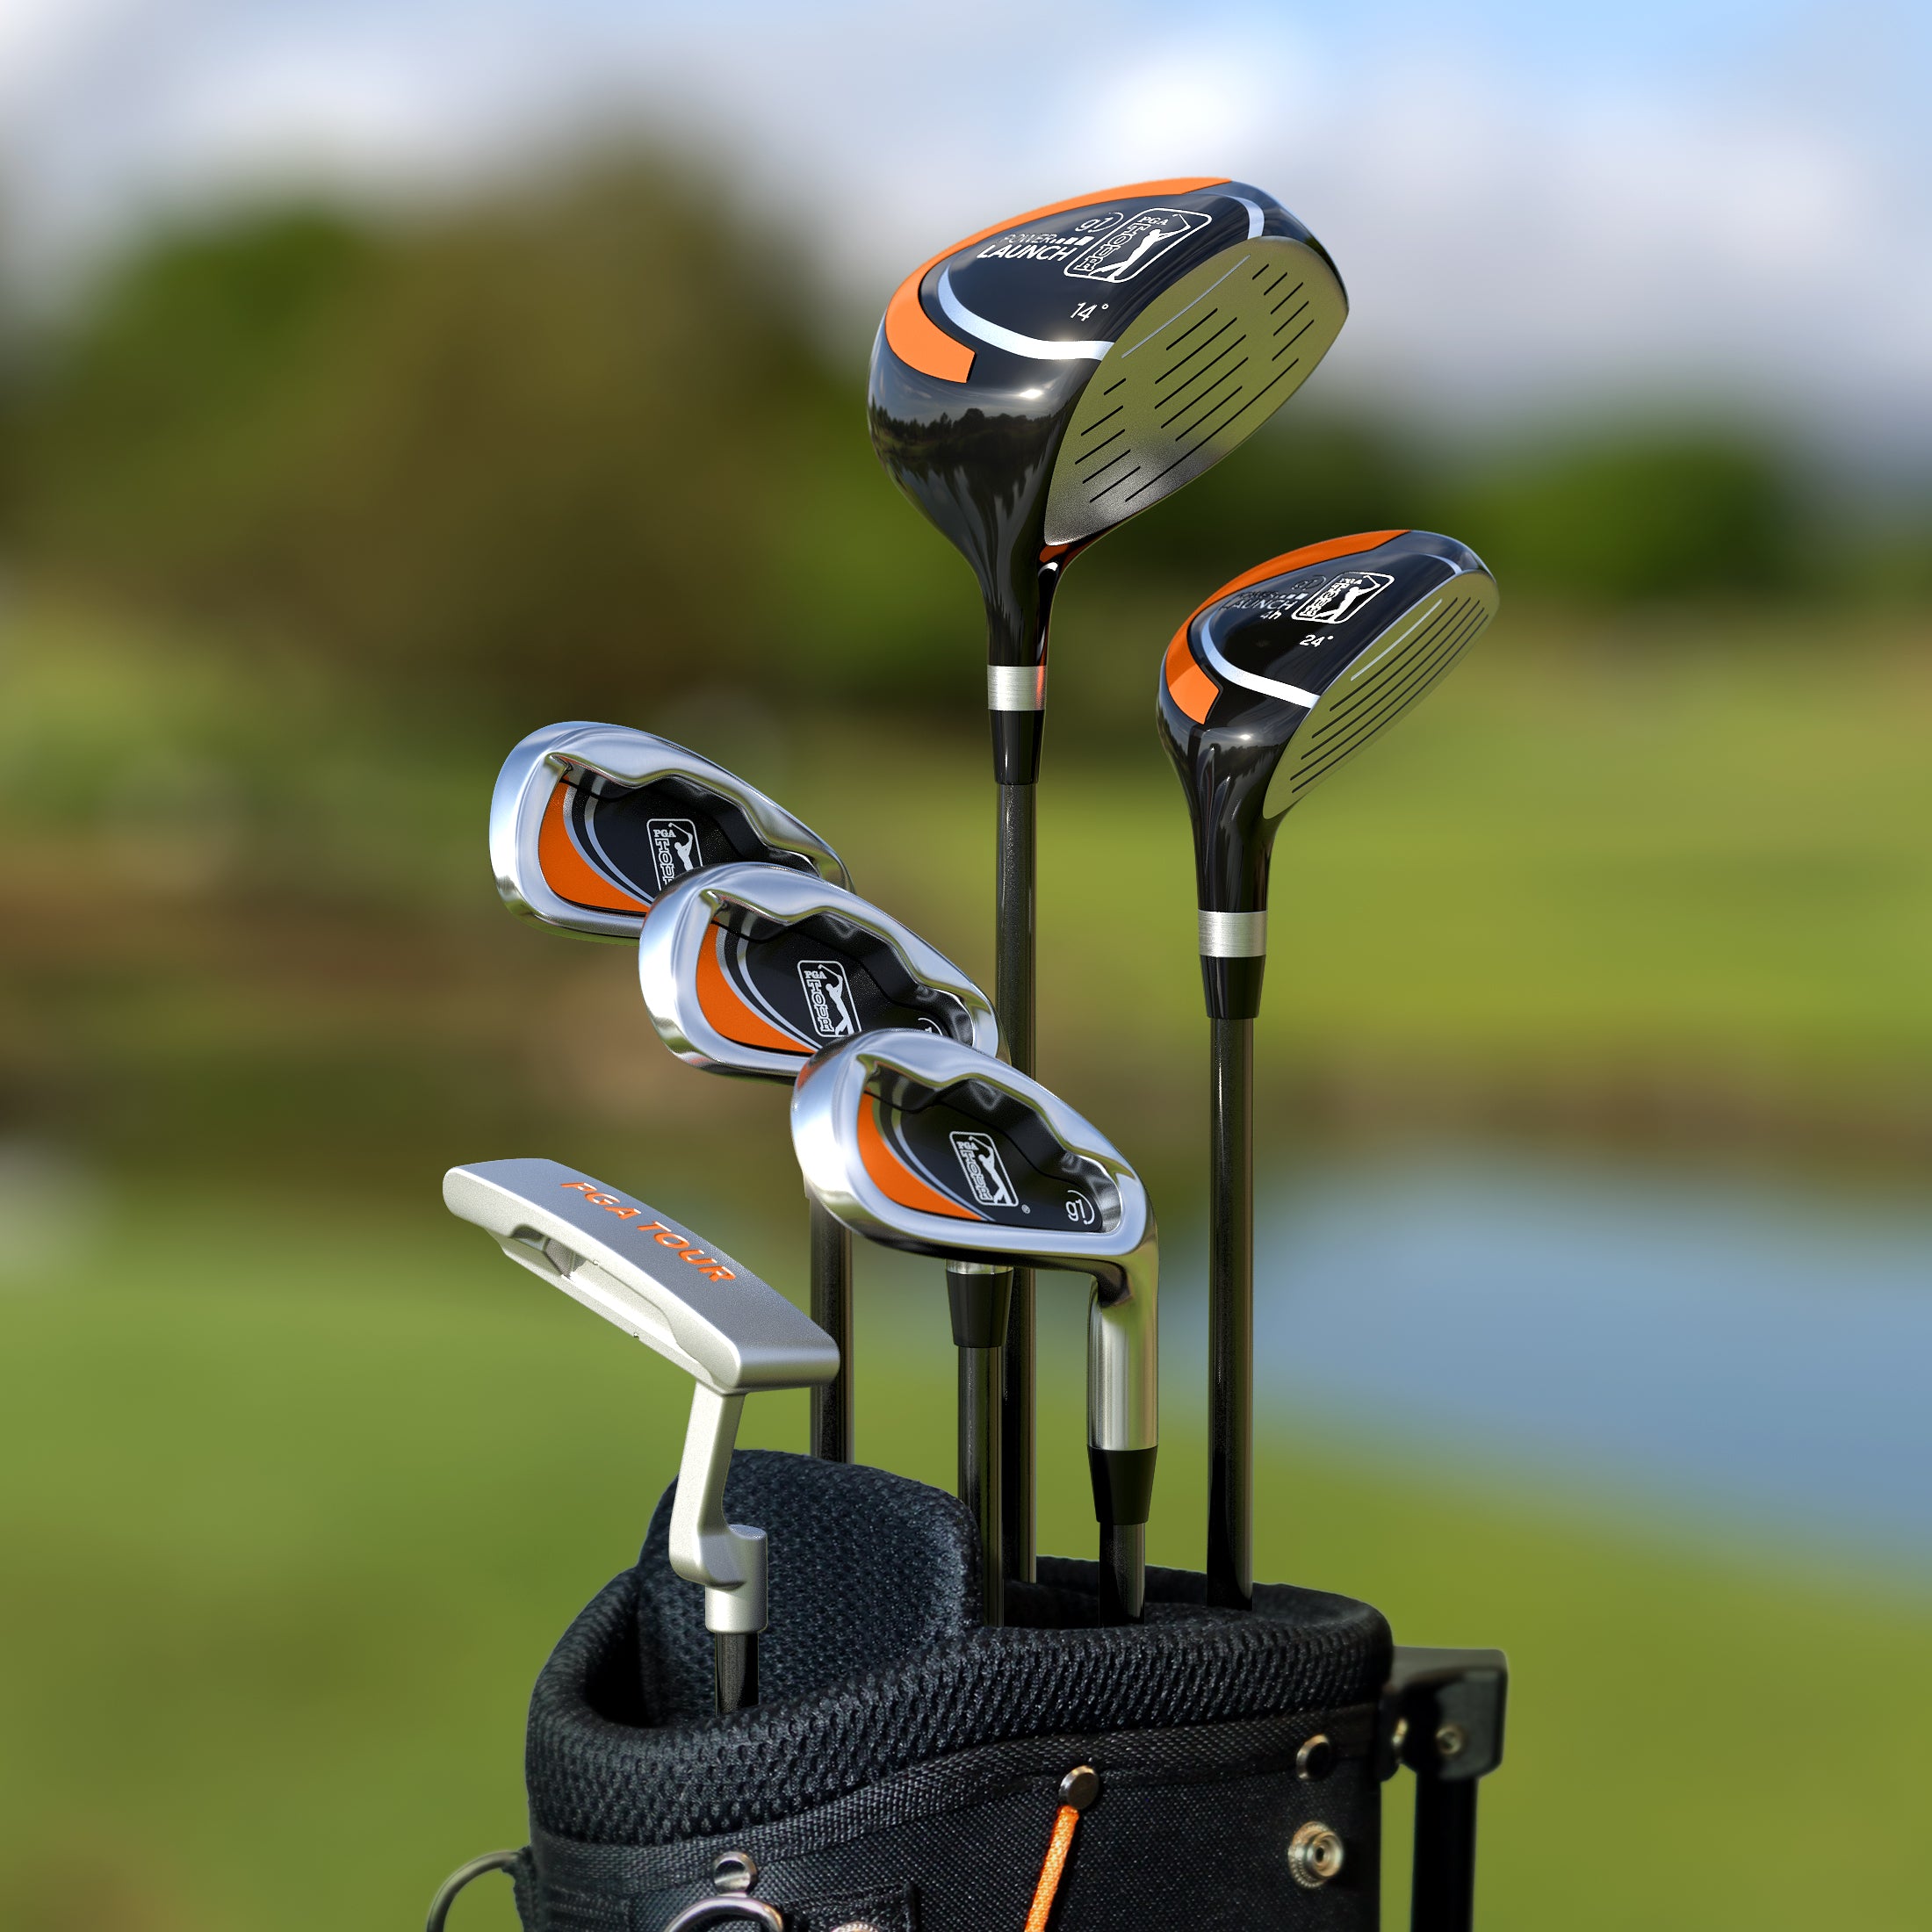 Complete Golf Club Sets & Junior Golf Clubs